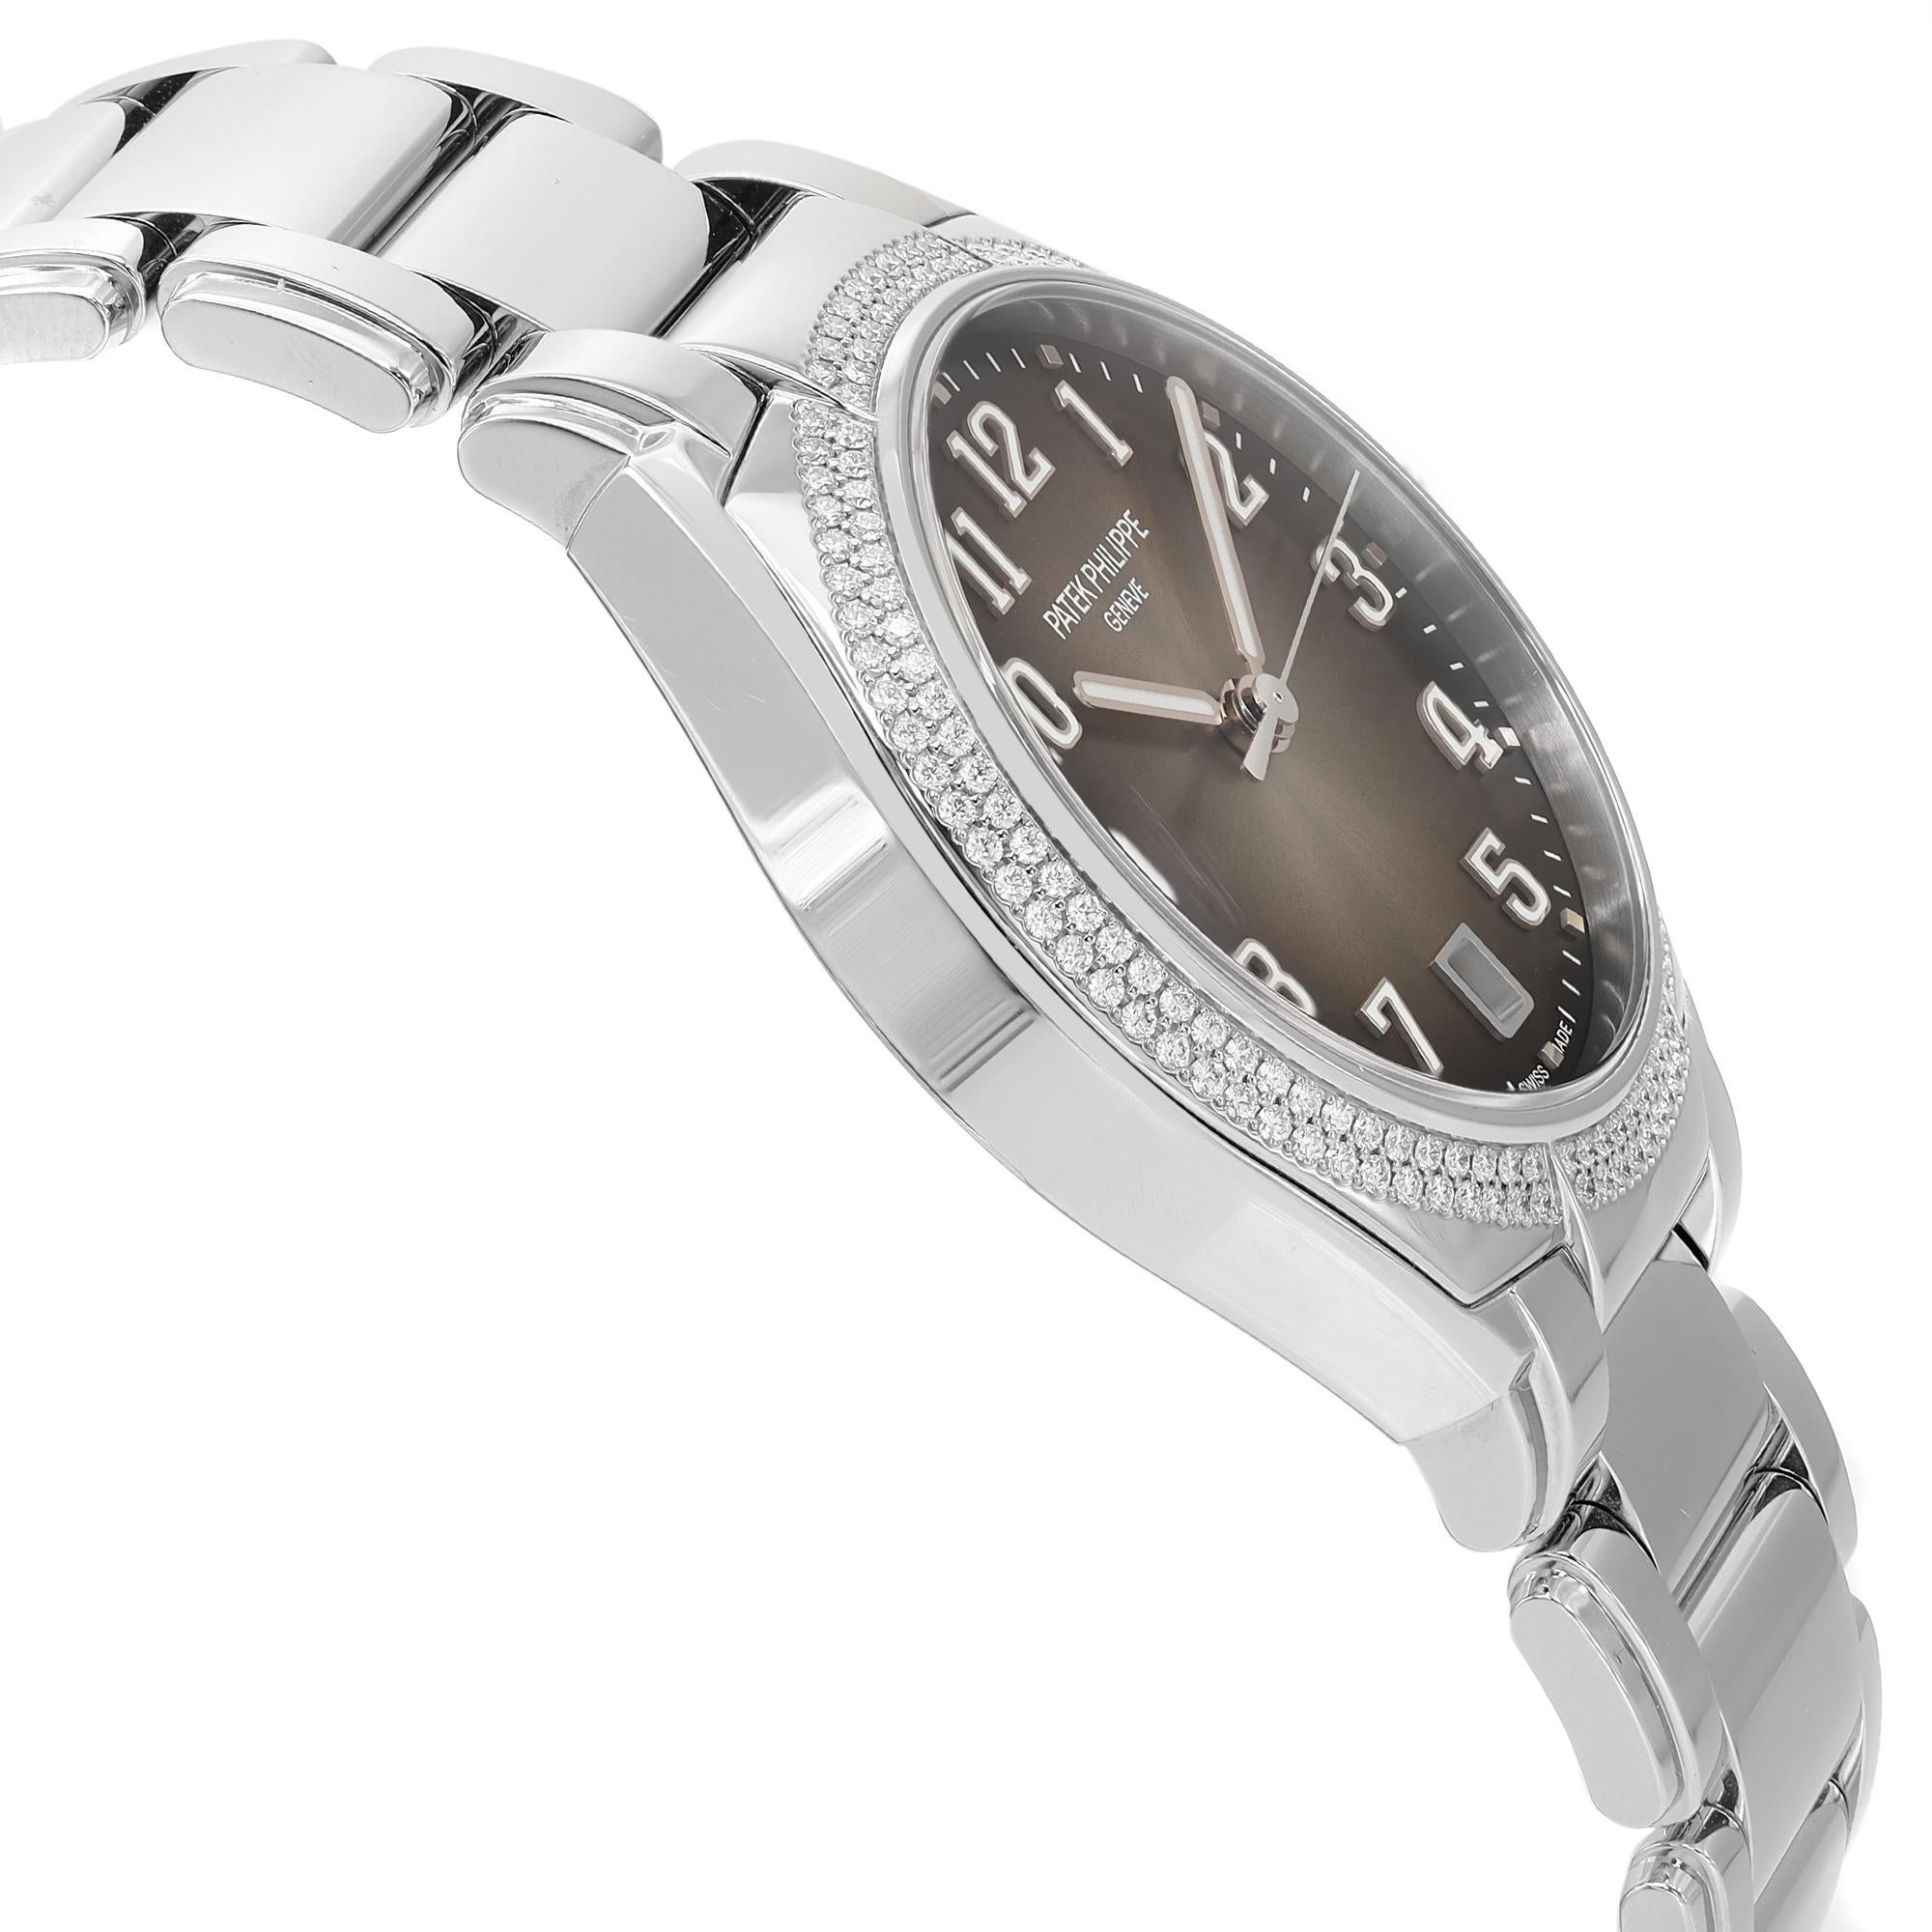 patek philippe twenty-4 women's watch price